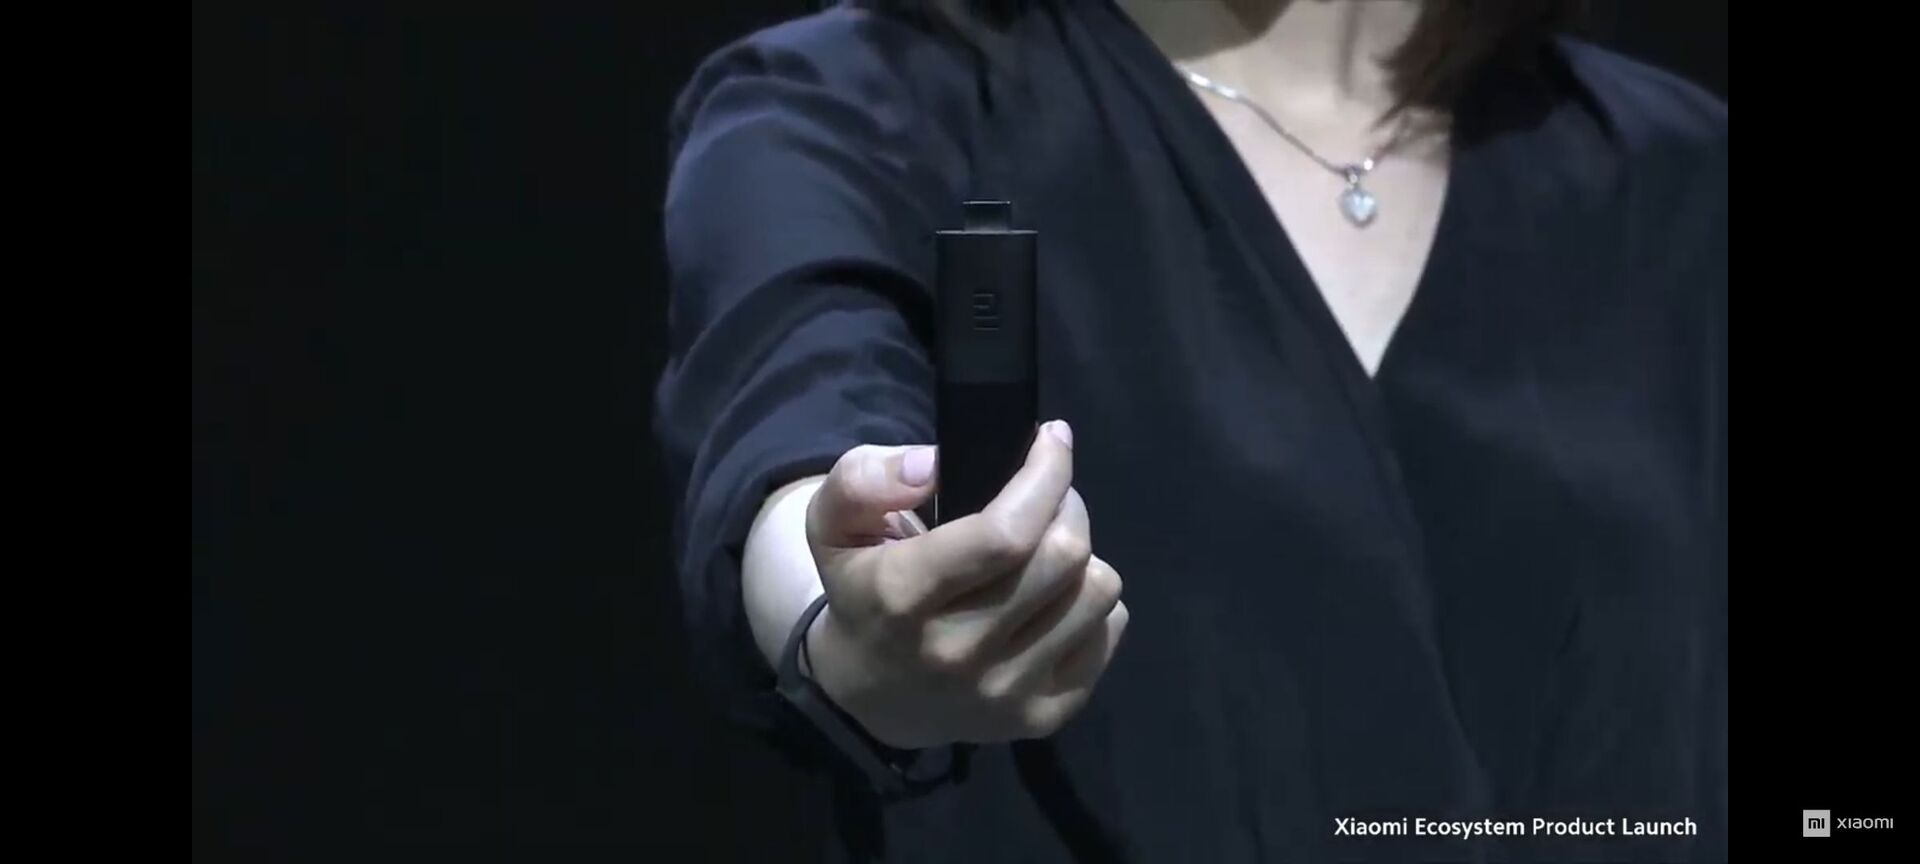 Xiaomi Mi TV Stick